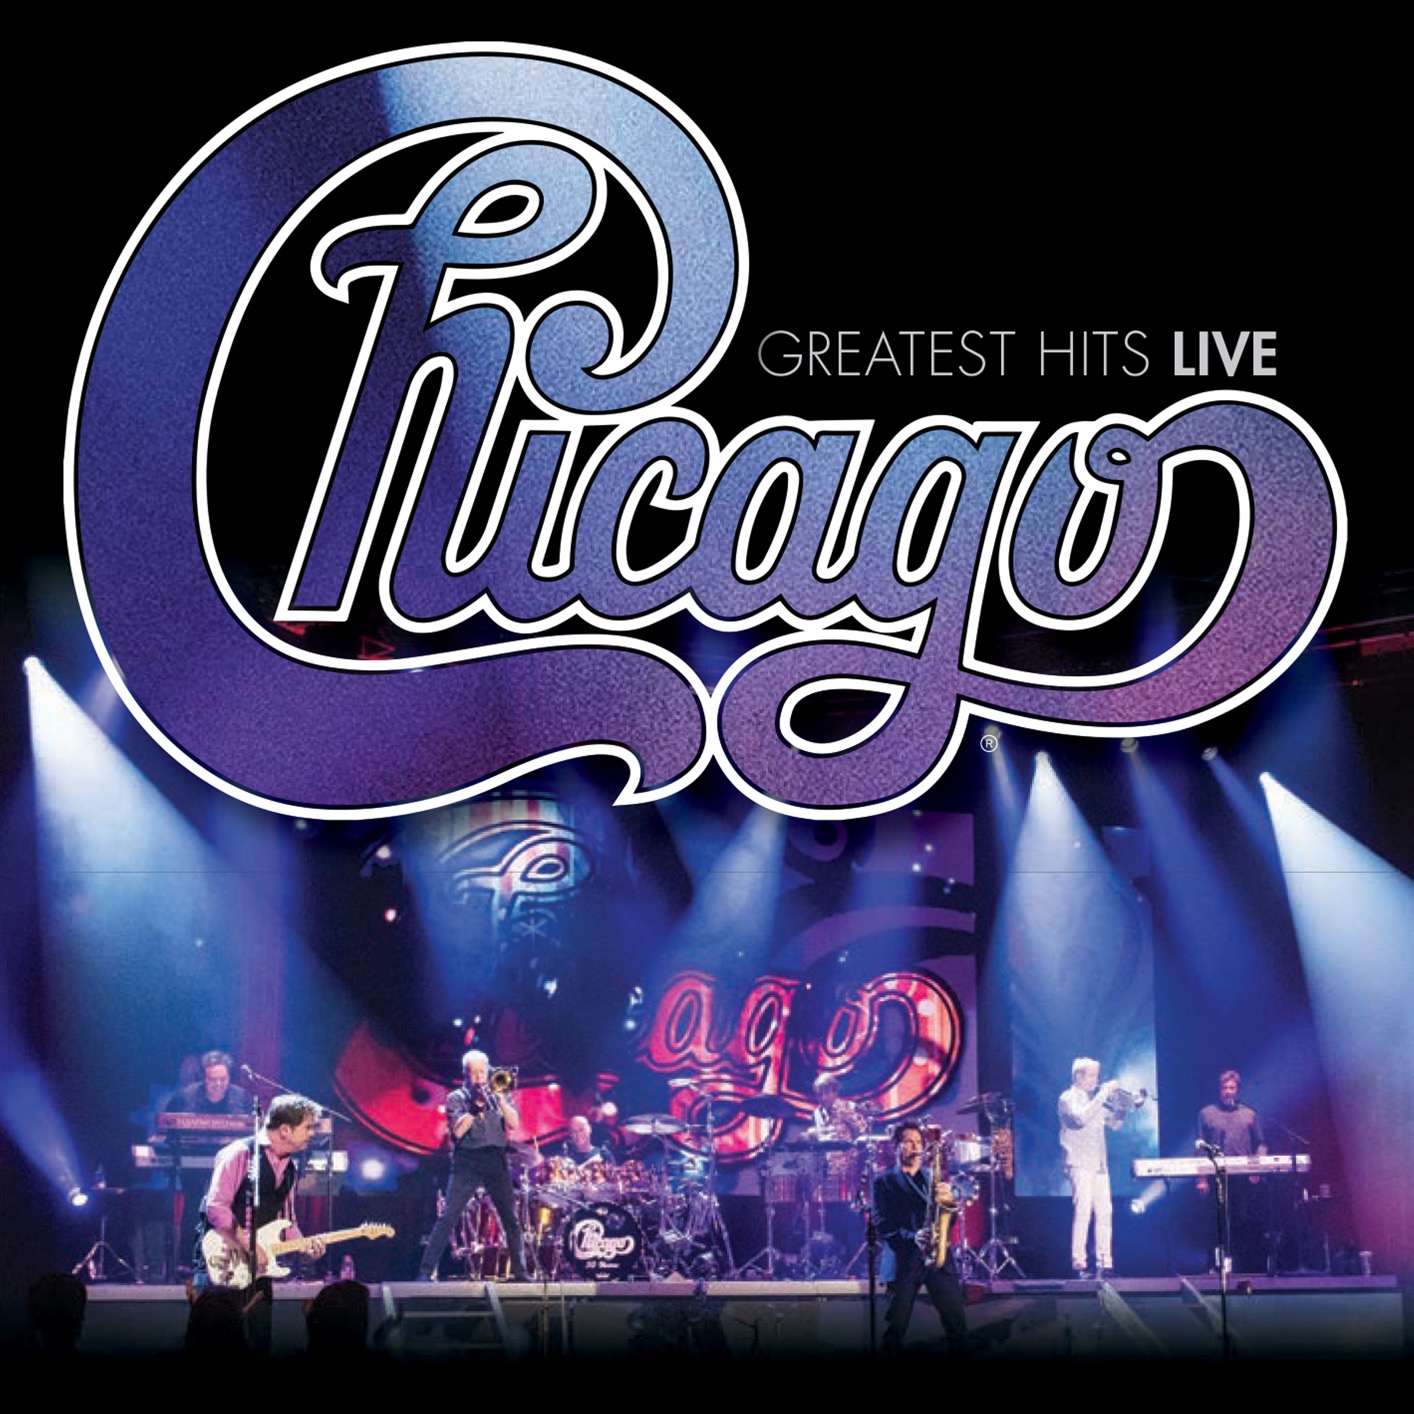 Chicago – Greatest Hits Live (2018) [FLAC 24bit/48kHz]